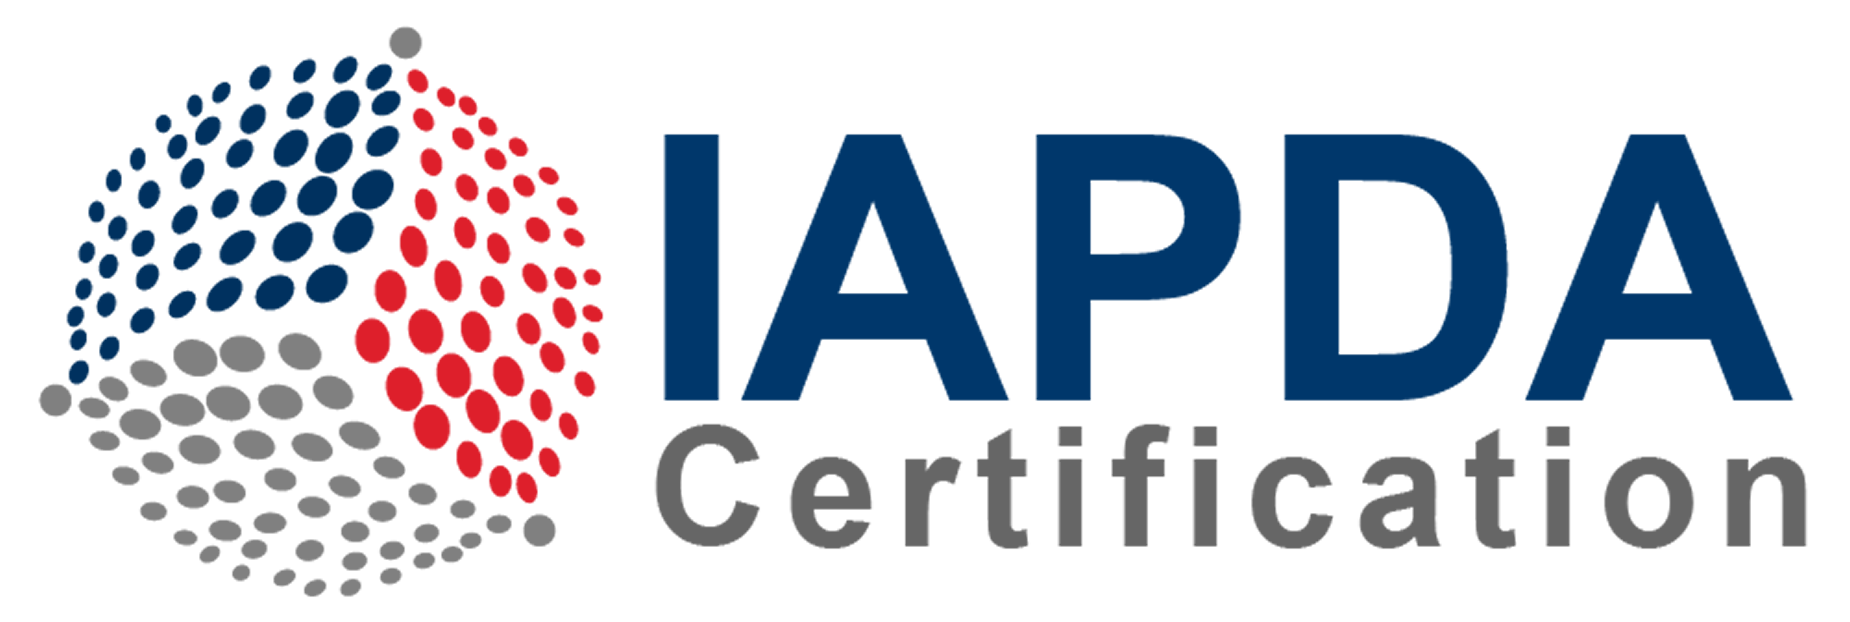 IAPDA Certification badge